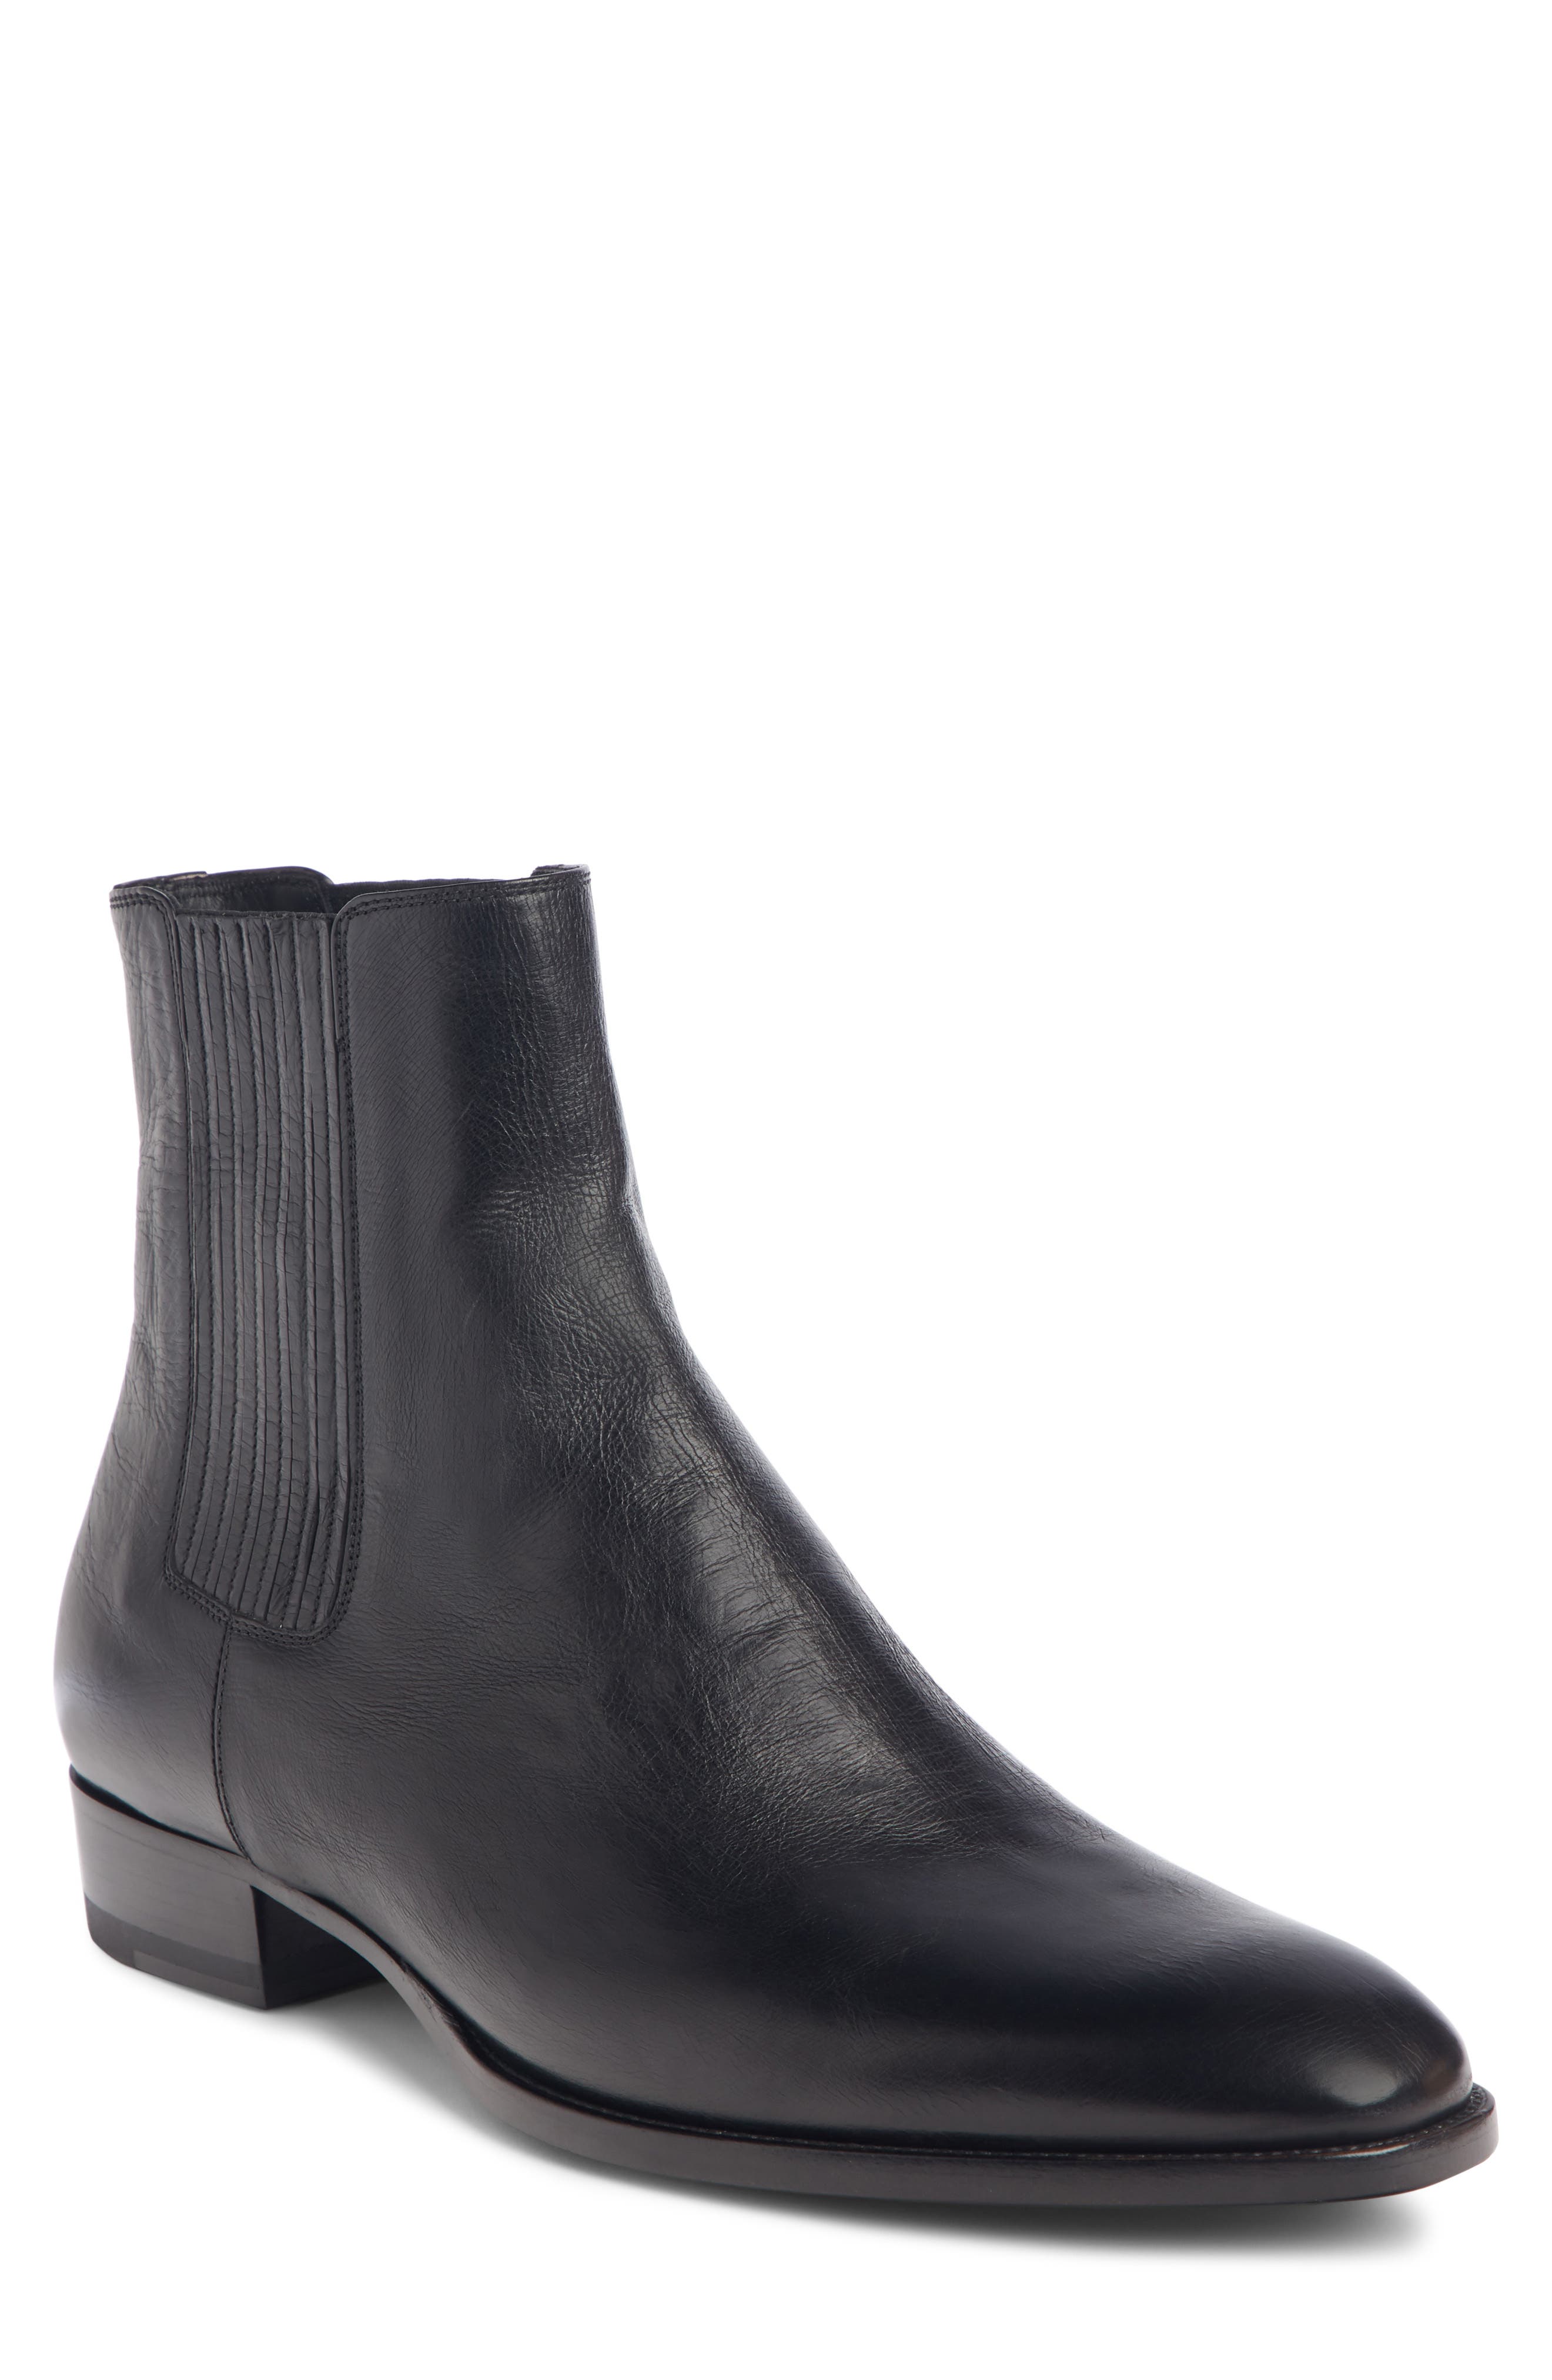 Yves Saint Laurent Boots Flash Sales, 51% OFF | www.simbolics.cat